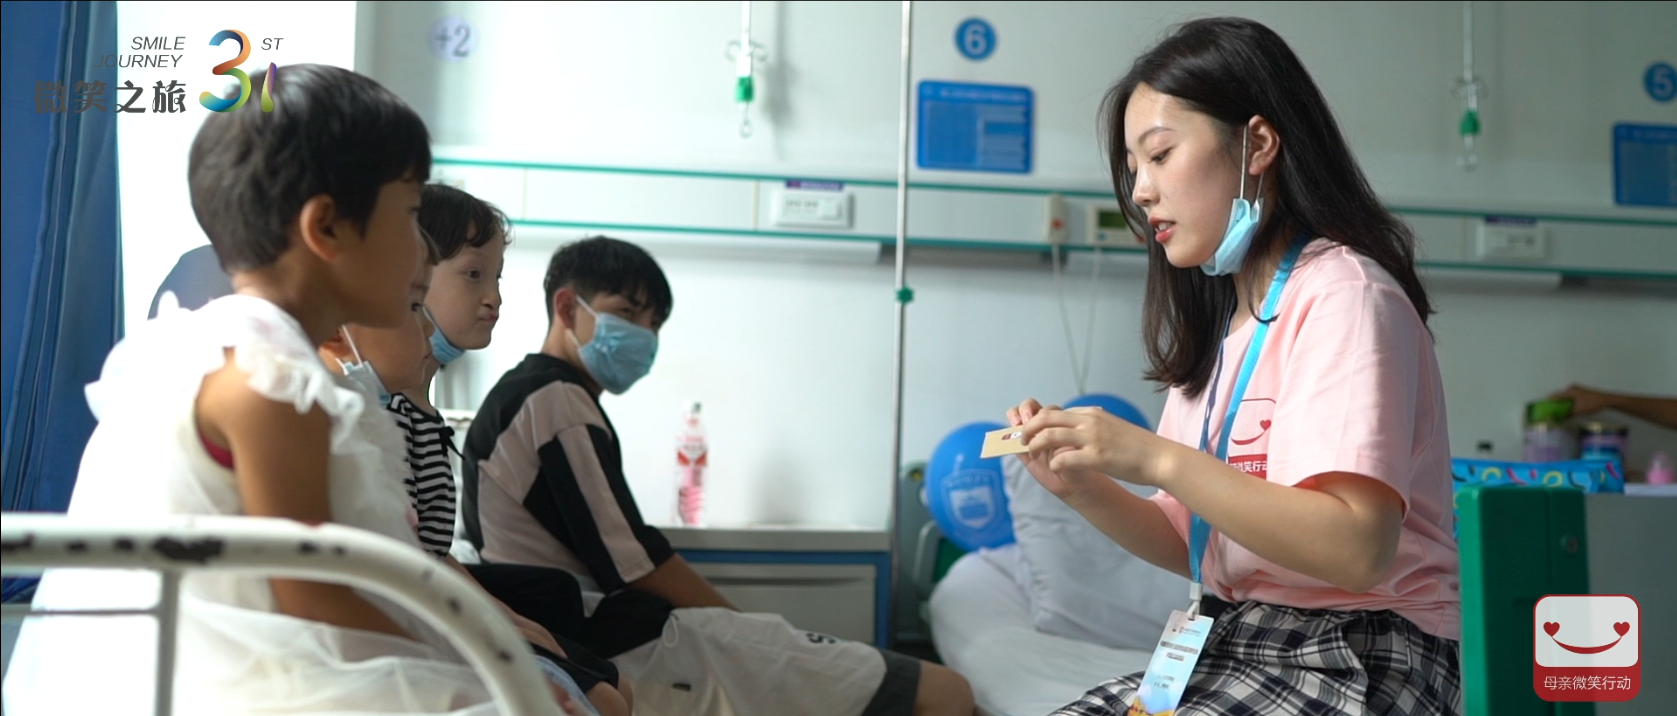 Wellington College Hangzhou funds 7 child surgeries